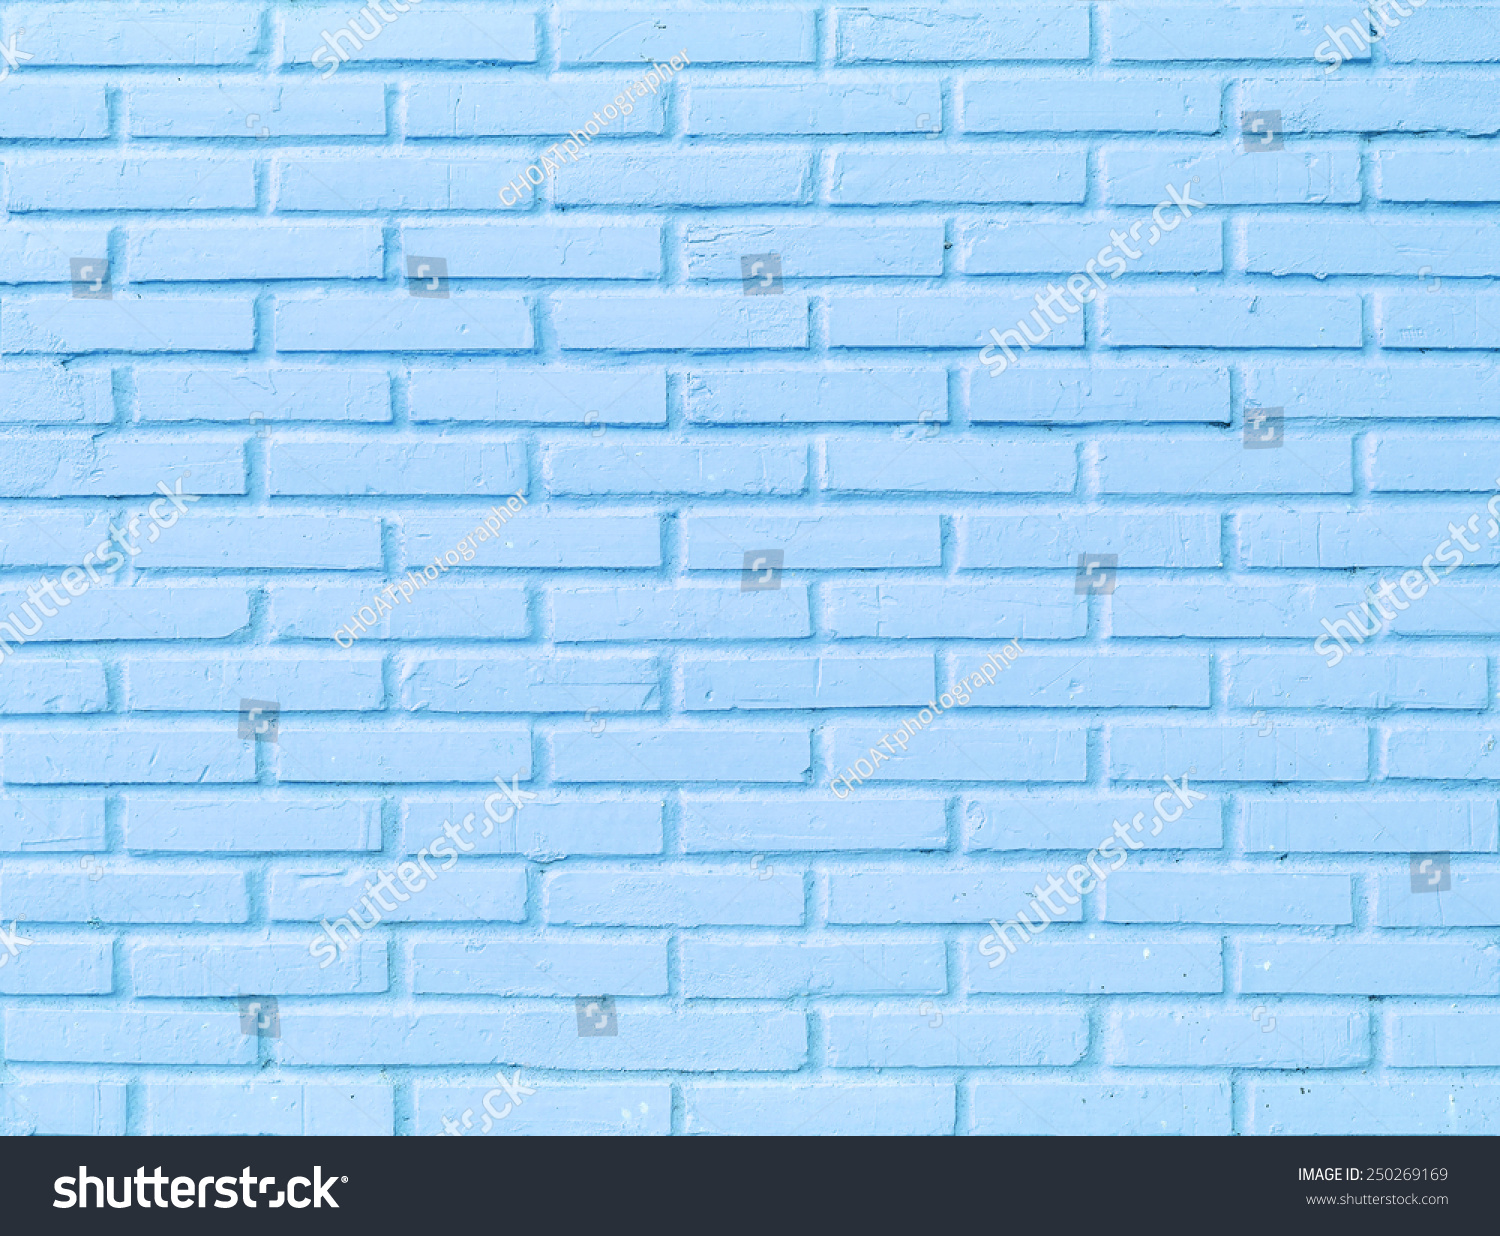 Stock Photo Light Blue Tiles Brick Wall Texture Background 250269169 